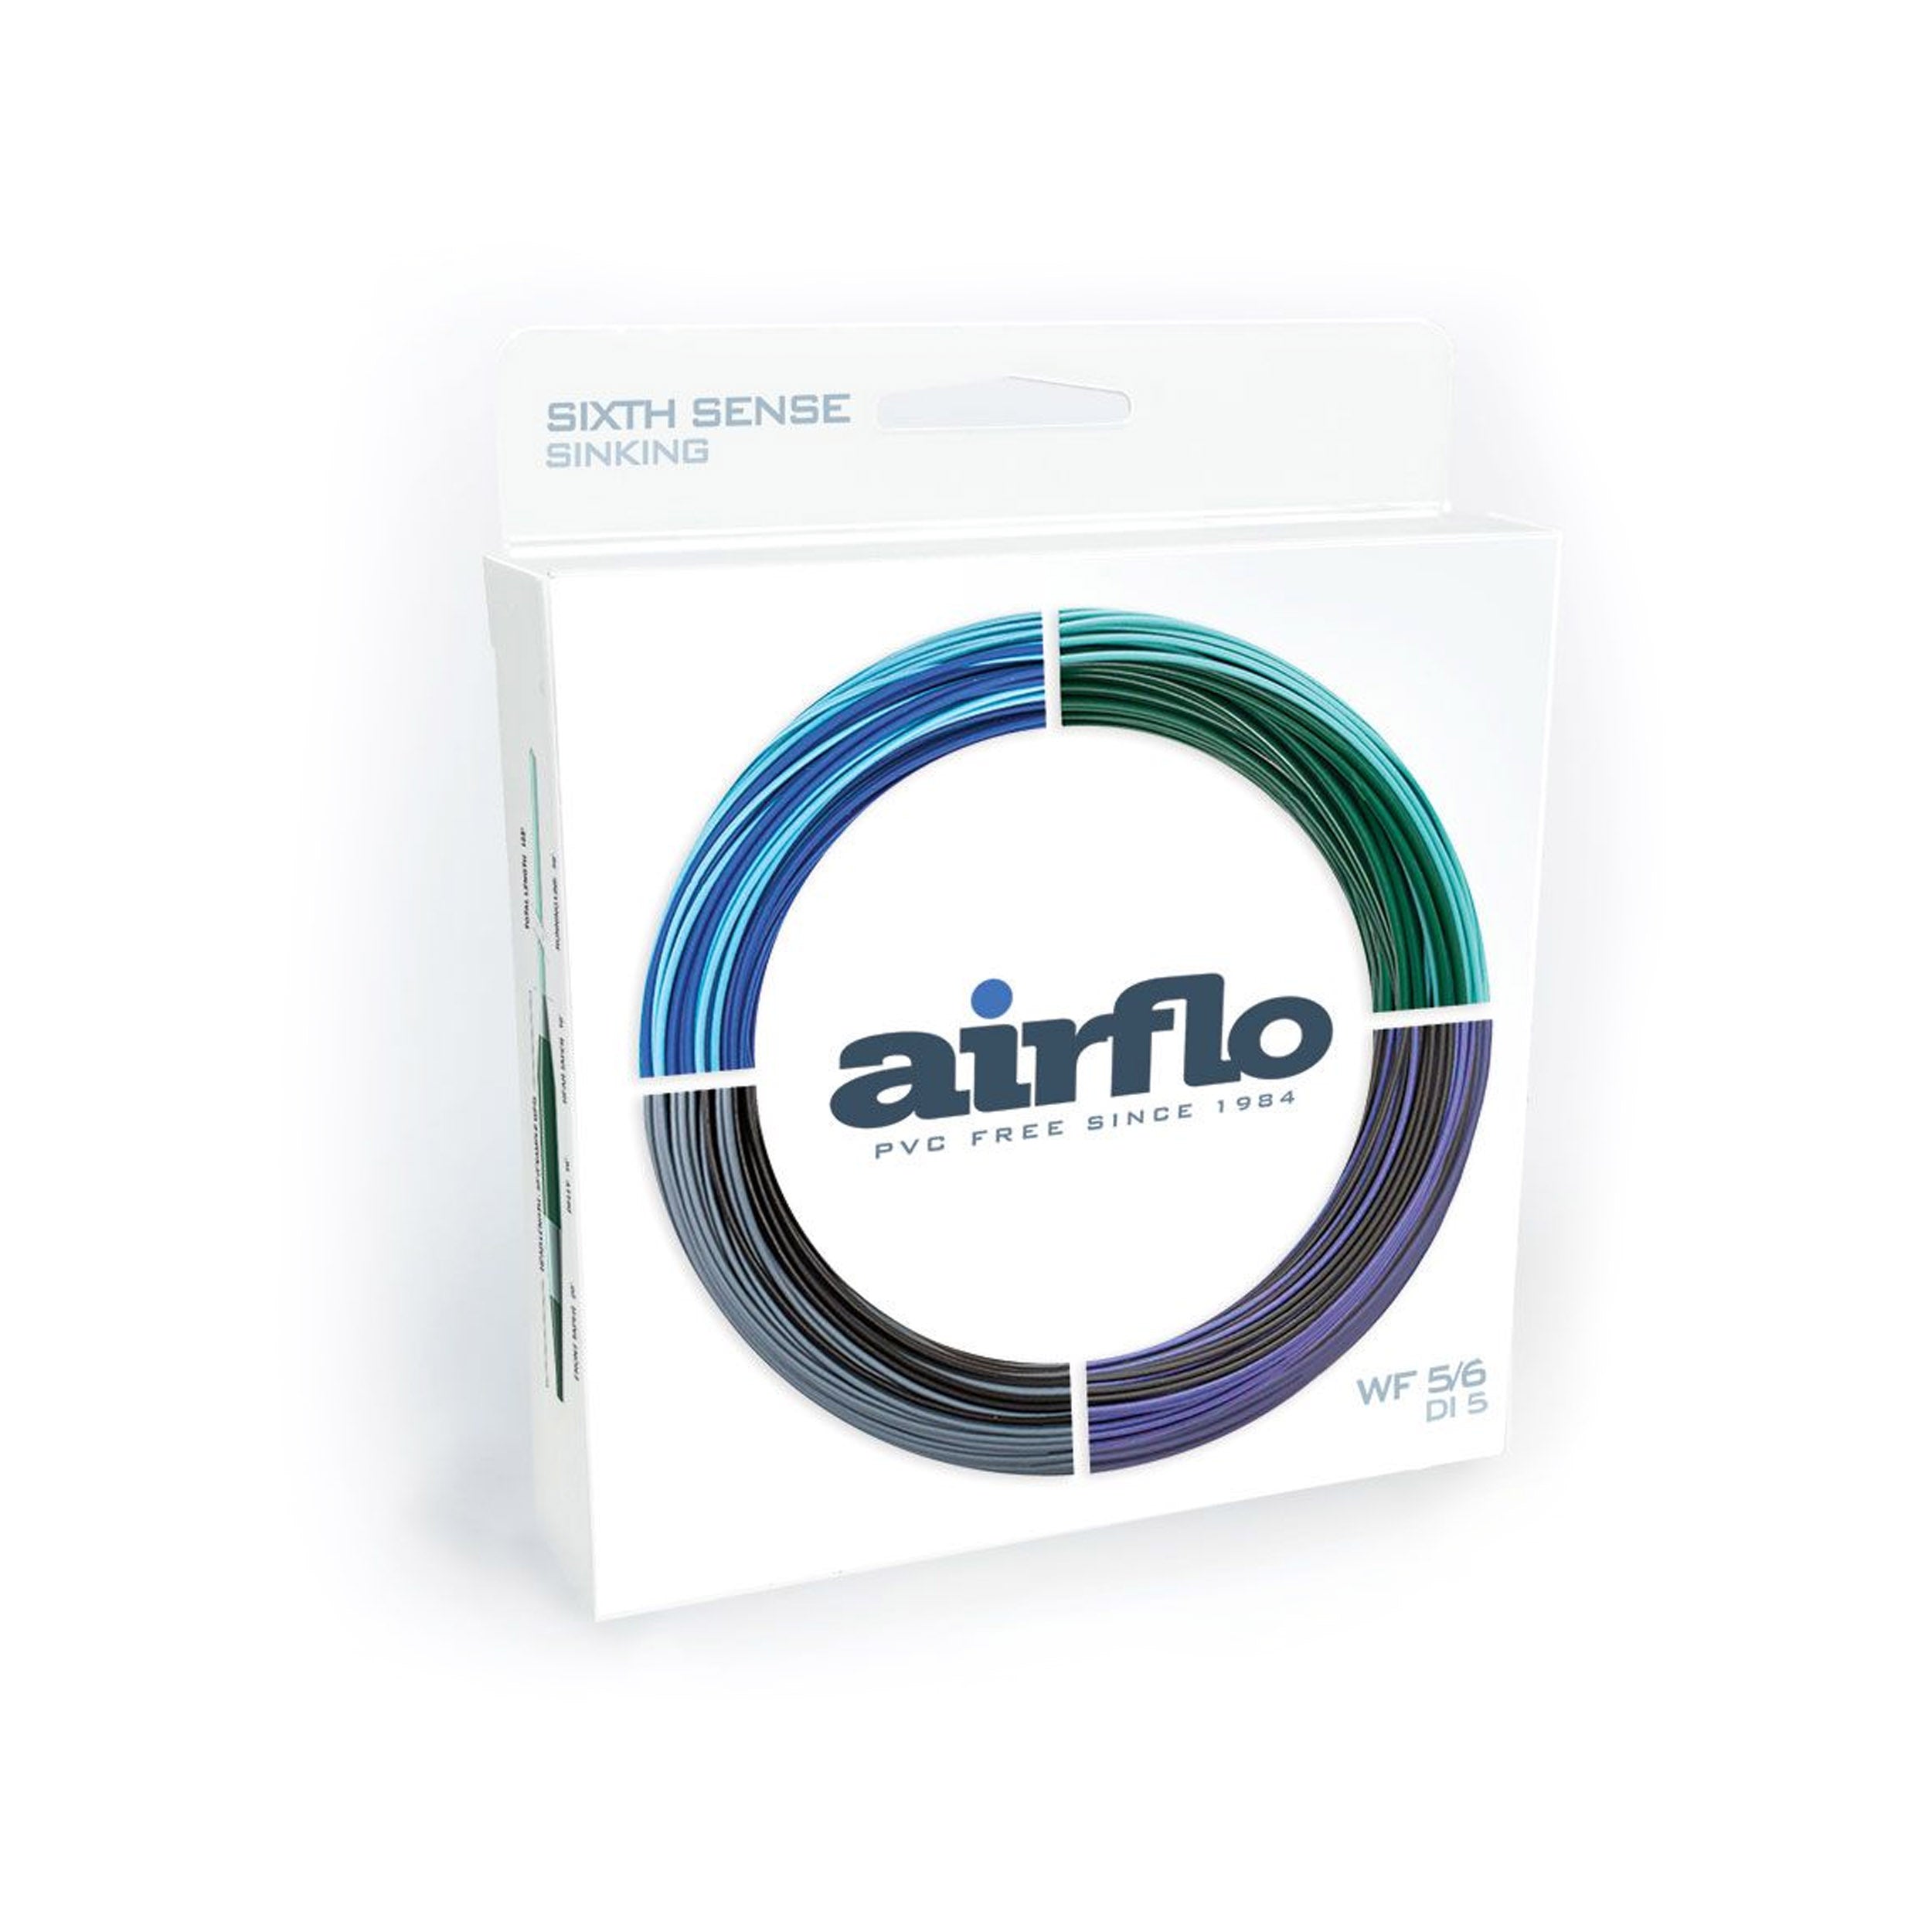 Airflo - Sixth Sense Sinking Fly Line